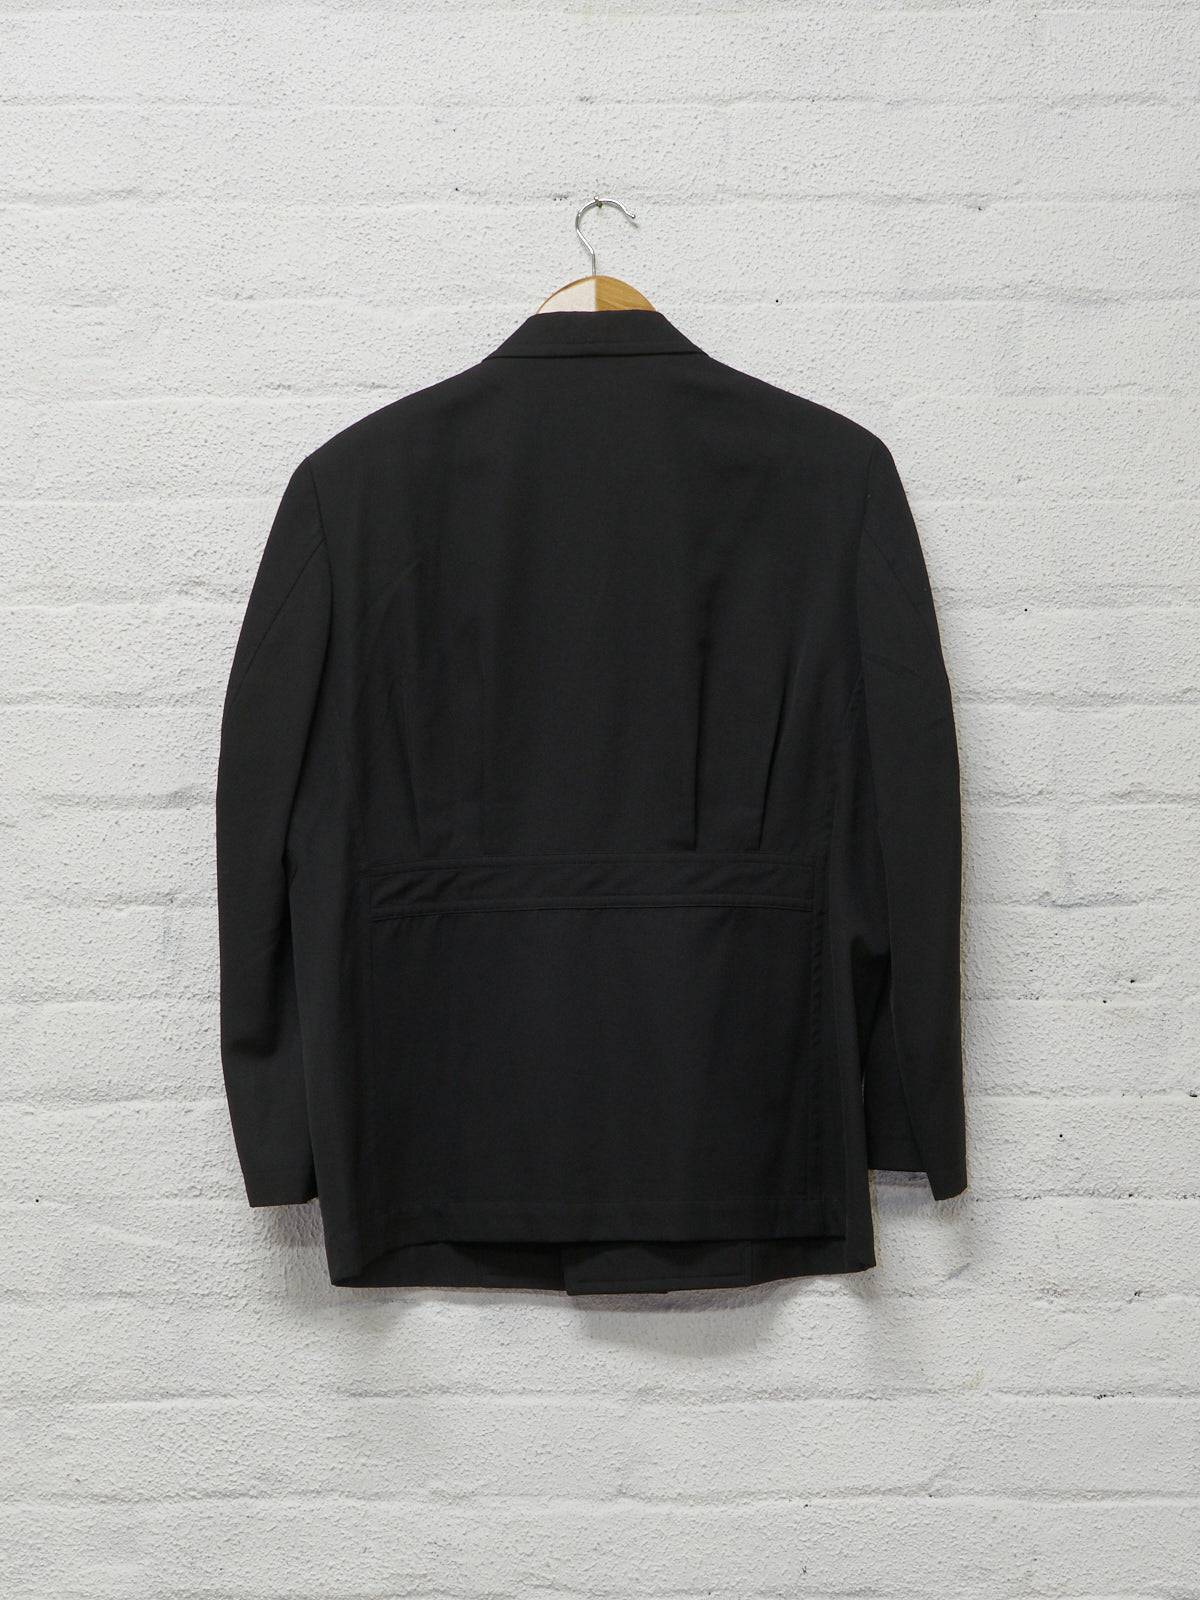 y's yohji yamamoto black wool zip pocket blazer - 1990s